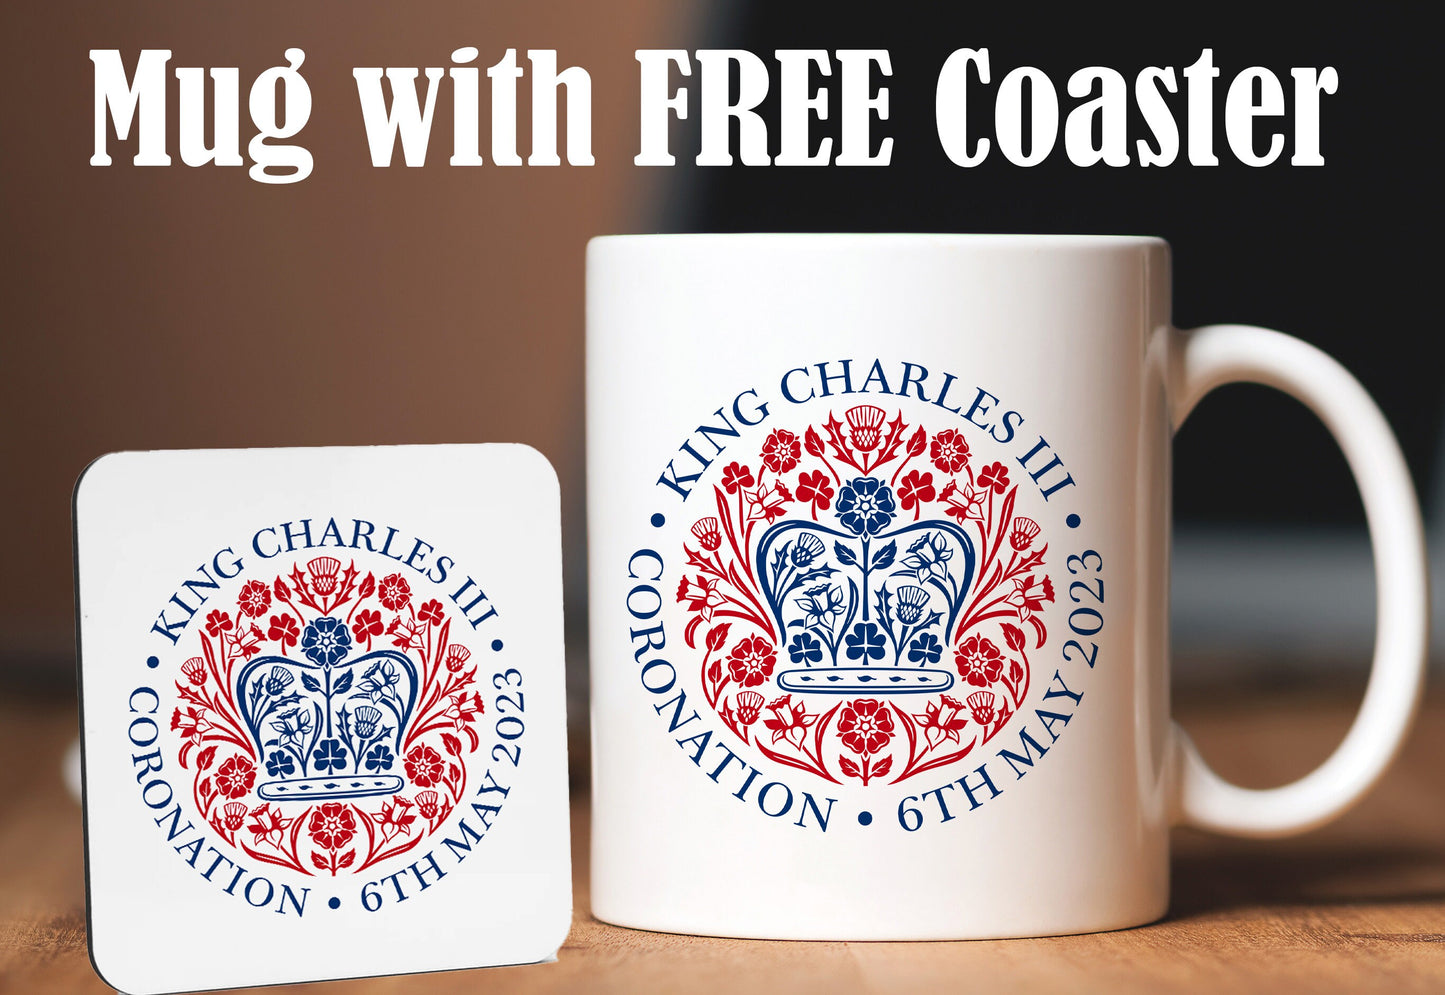 King Charles III Coronation Mug and FREE Coaster set | King Charles Coronation Gift | Coronation Tea Party | Charles the Third Mug